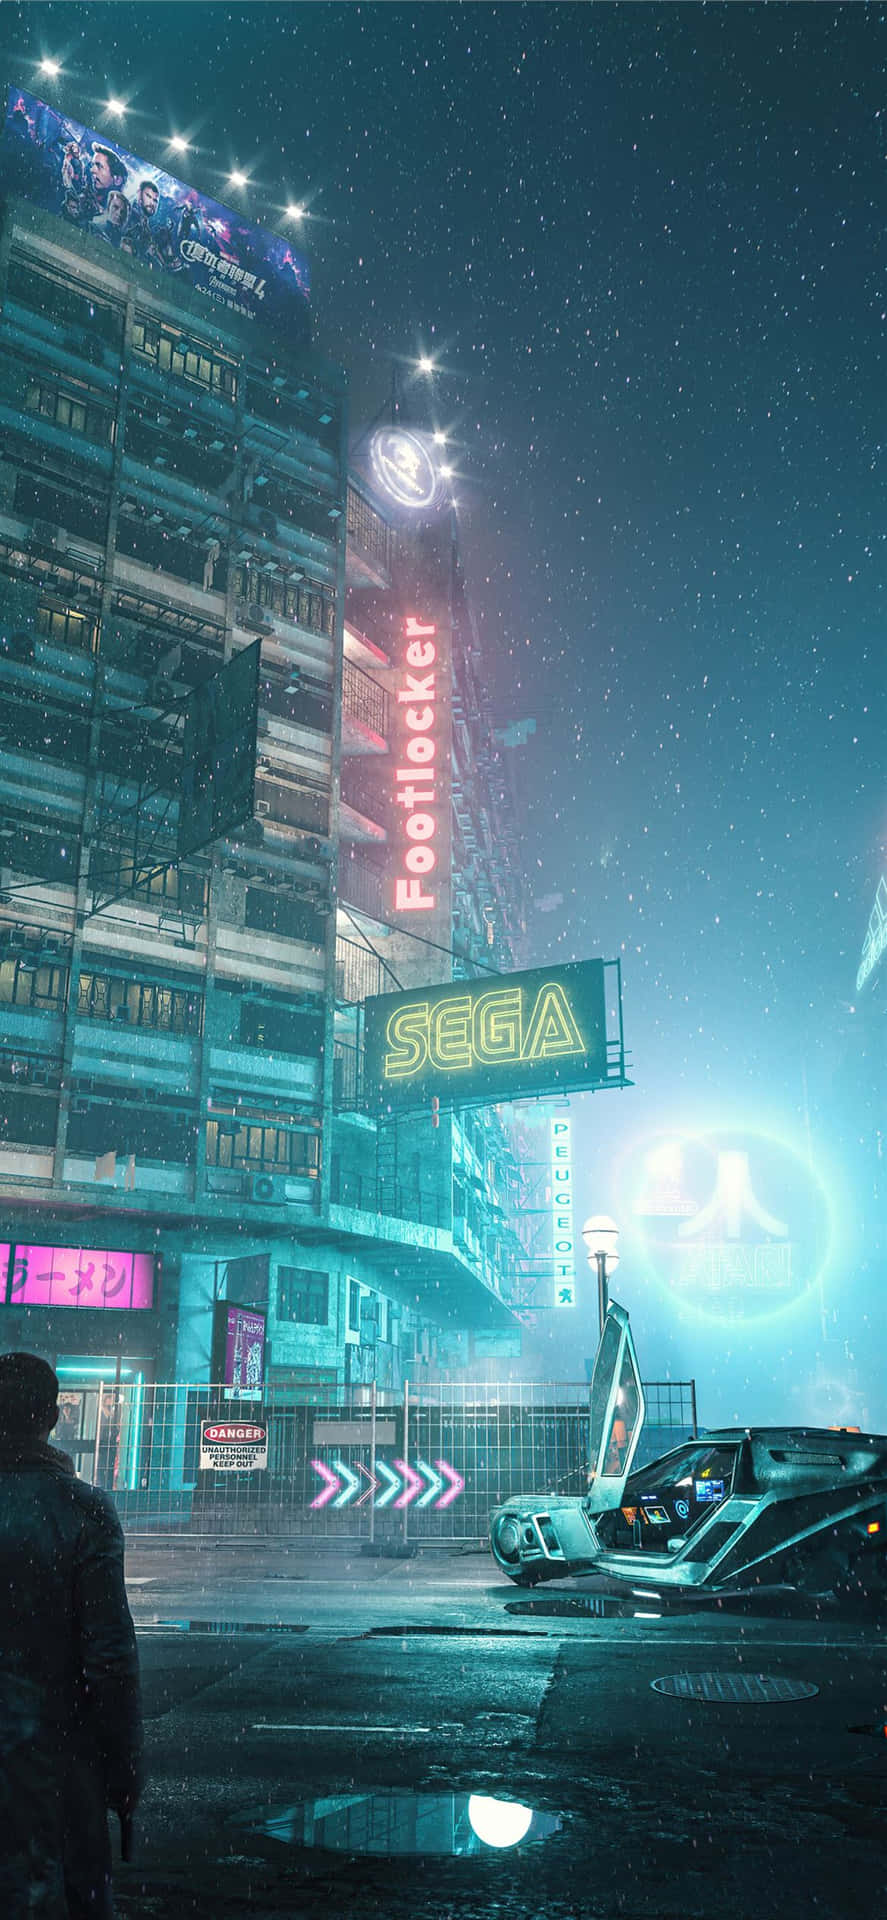 Cyberpunk City - A City With A Futuristic City Wallpaper